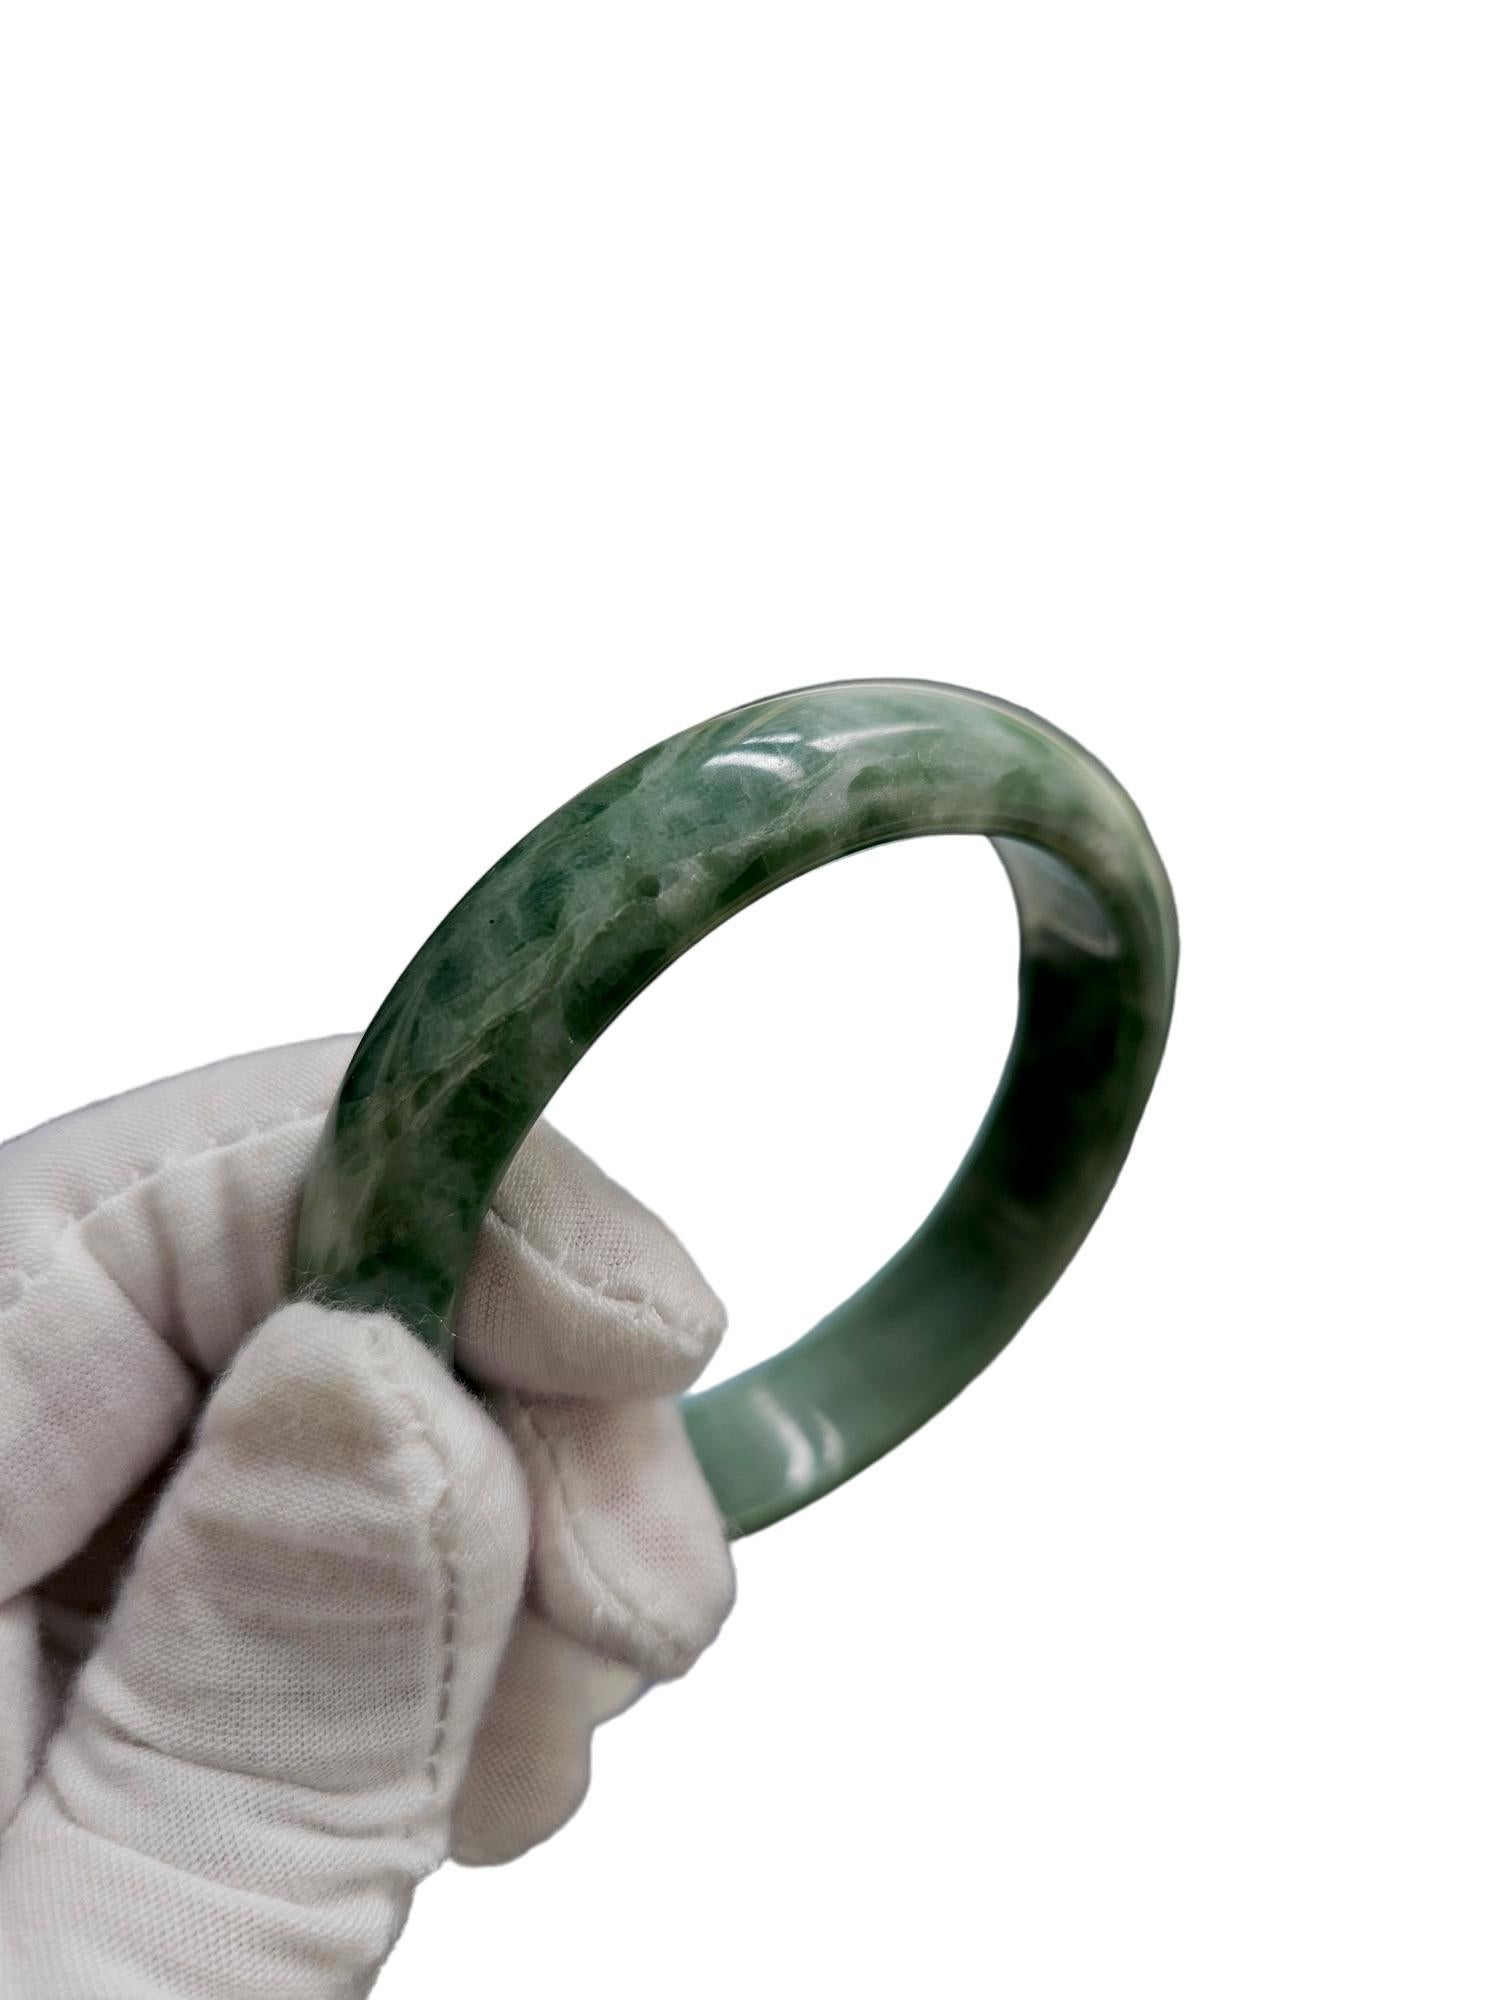 Earth's Burmese A-Jade Bangle Bracelet (MADE IN JAPAN) Green Jadeite 08808 For Sale 1